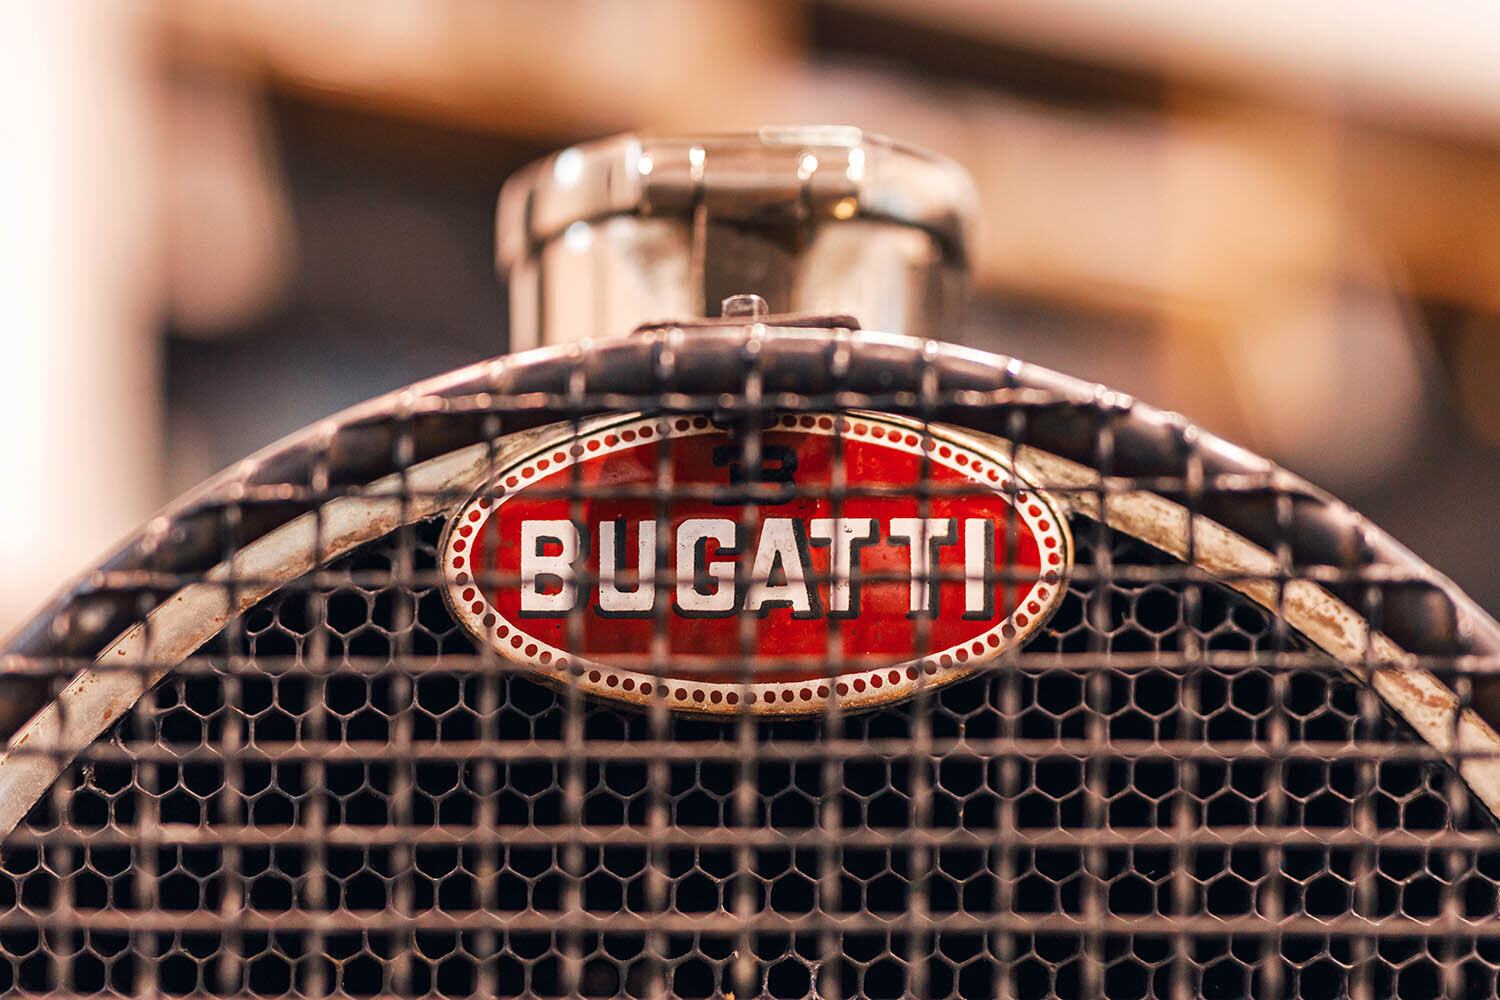 01_bugatti-macaron_automotive-1.jpg